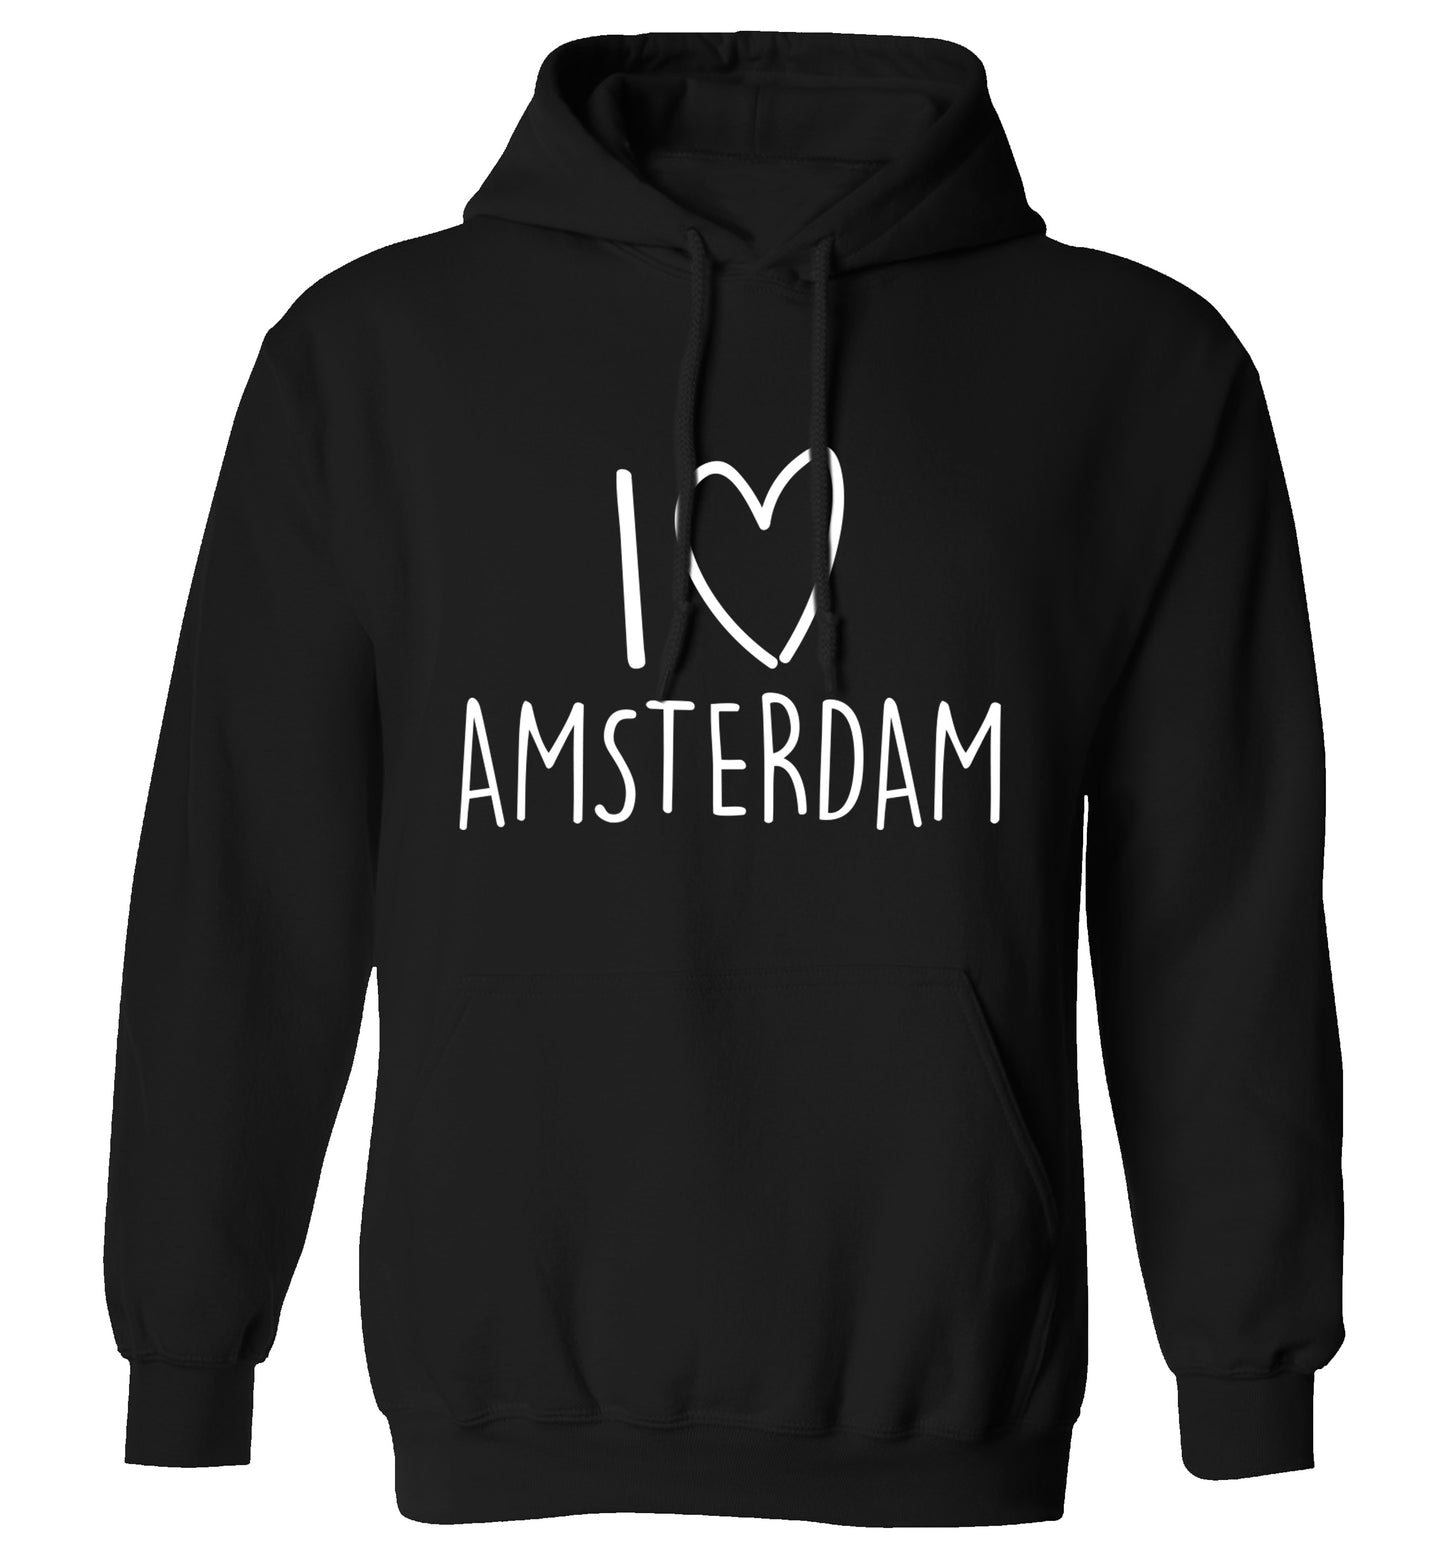 I love Amsterdam adults unisex black hoodie 2XL